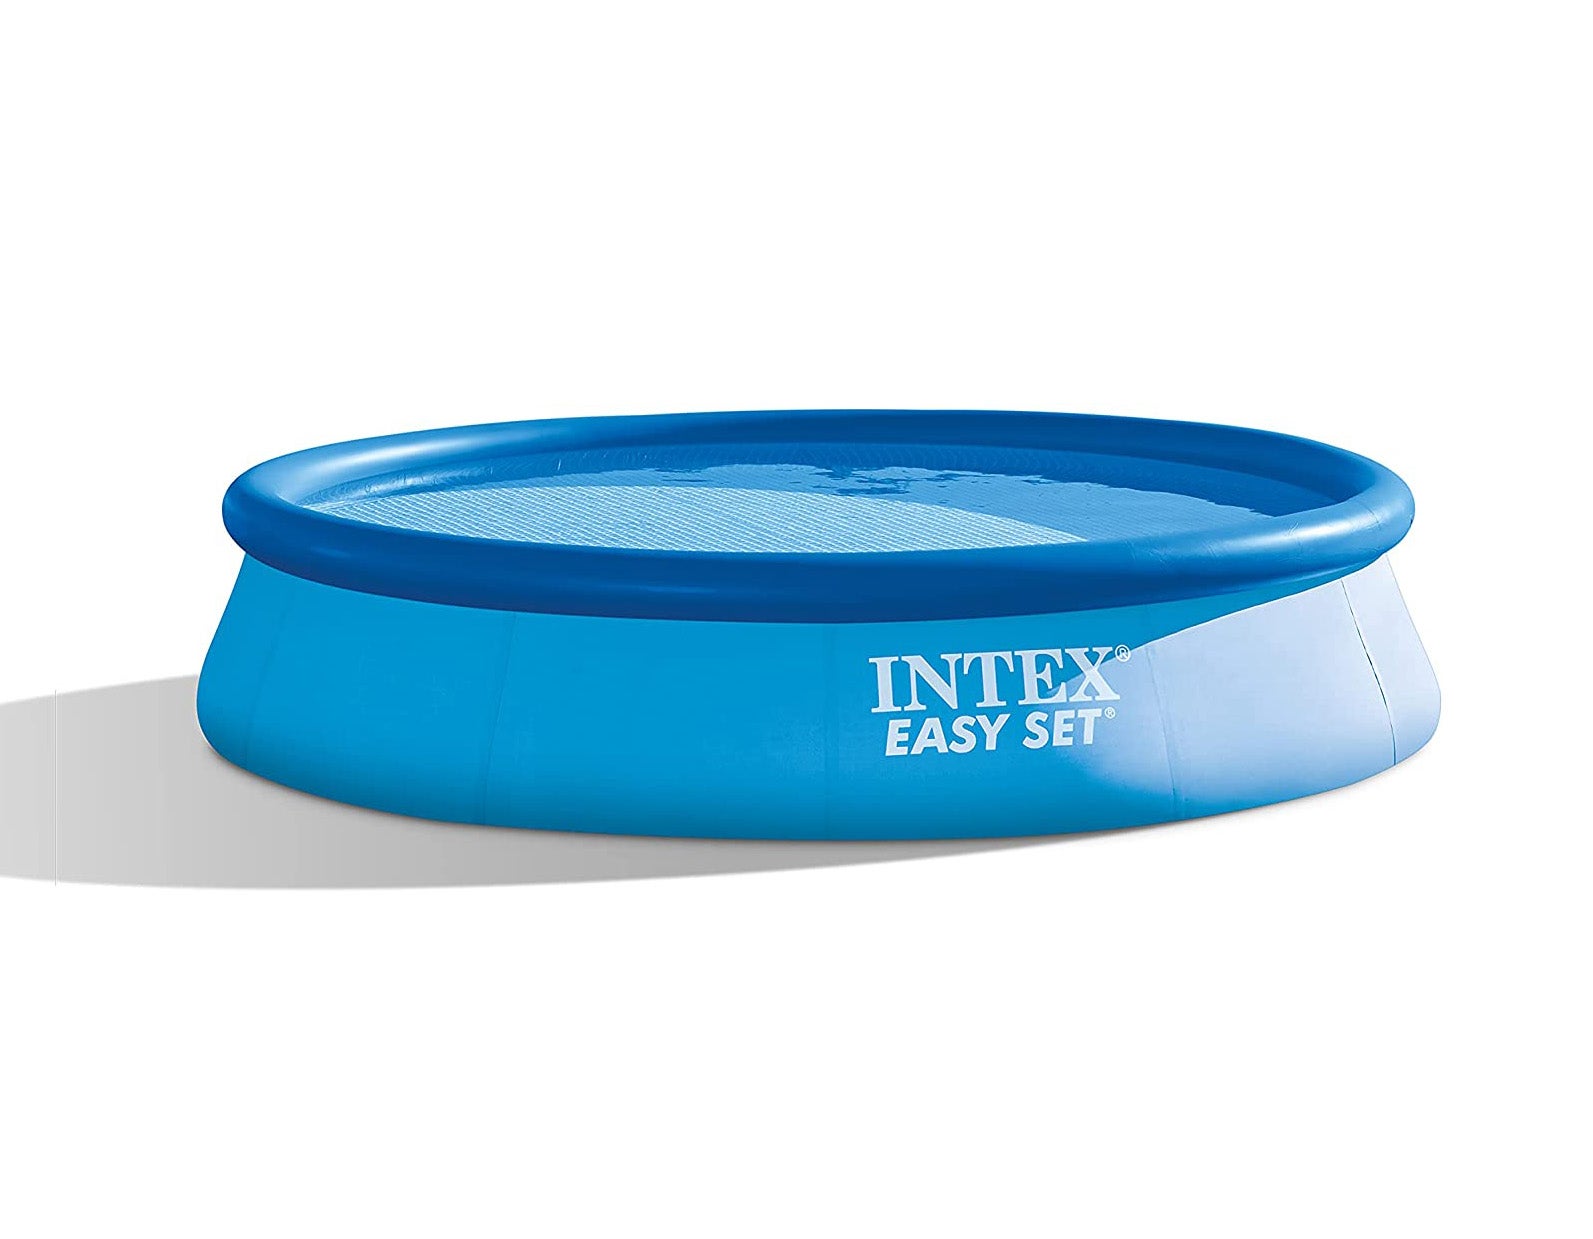 Intex Easy Set Pool with Cartridge Filter Pump